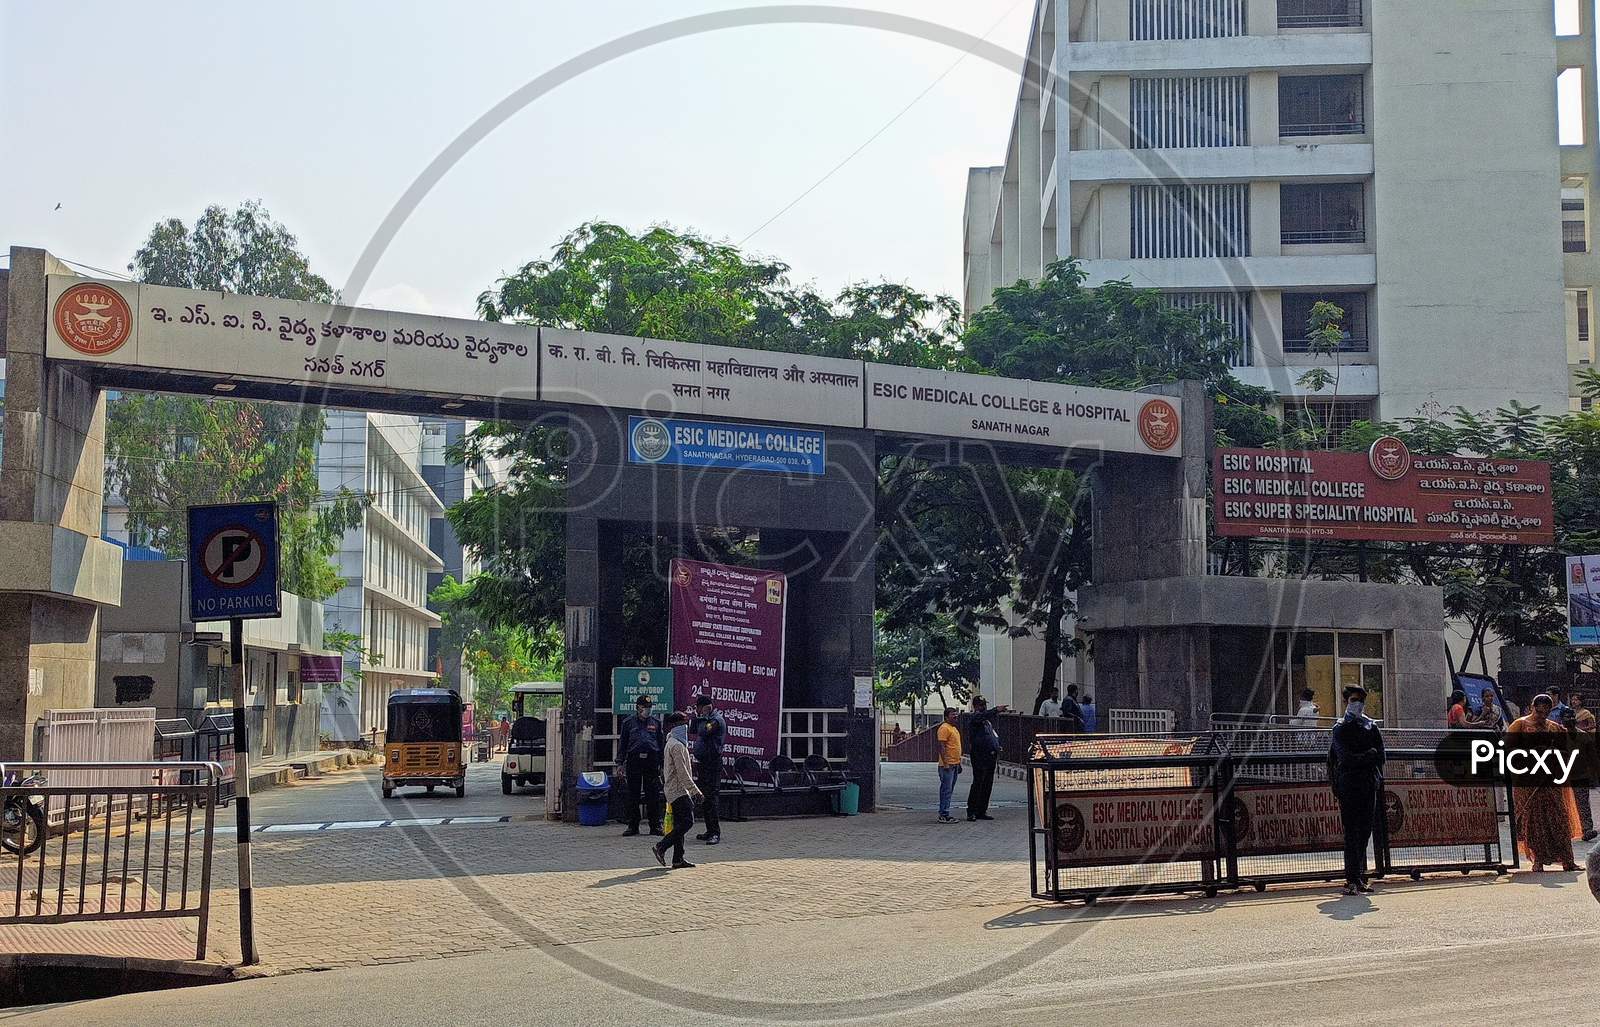 ESIC Hospital & Medical College & Super Speciality Hospital Sanathnagar Hyderabad